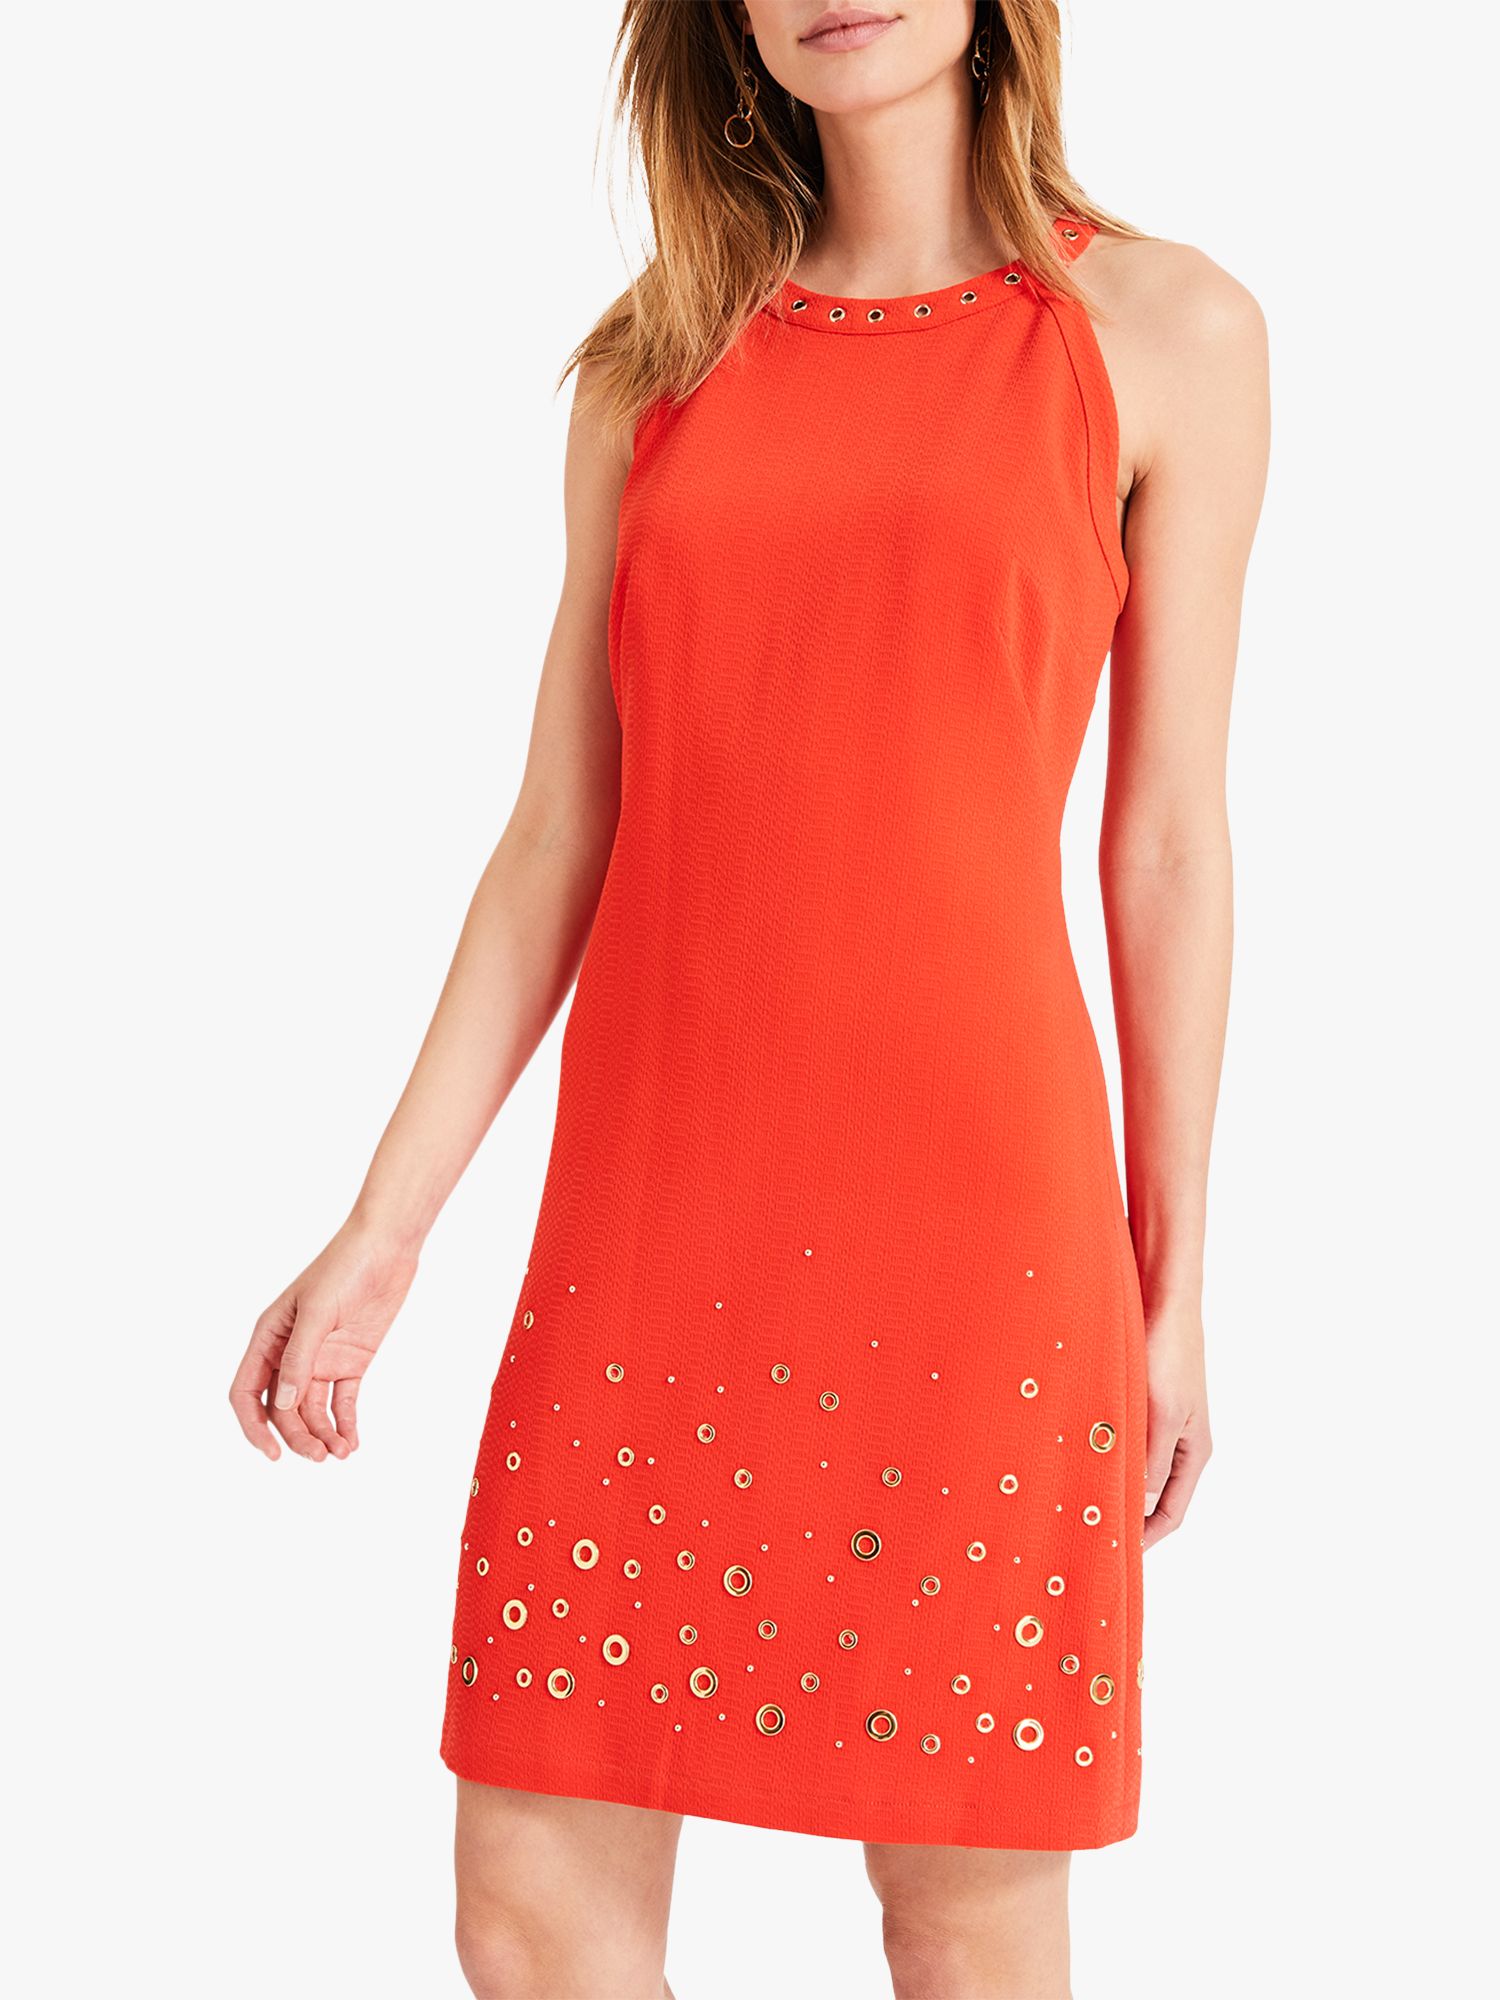 Damsel in a Dress Alixa Eyelet Dress, Orange 14 female 100% polyester